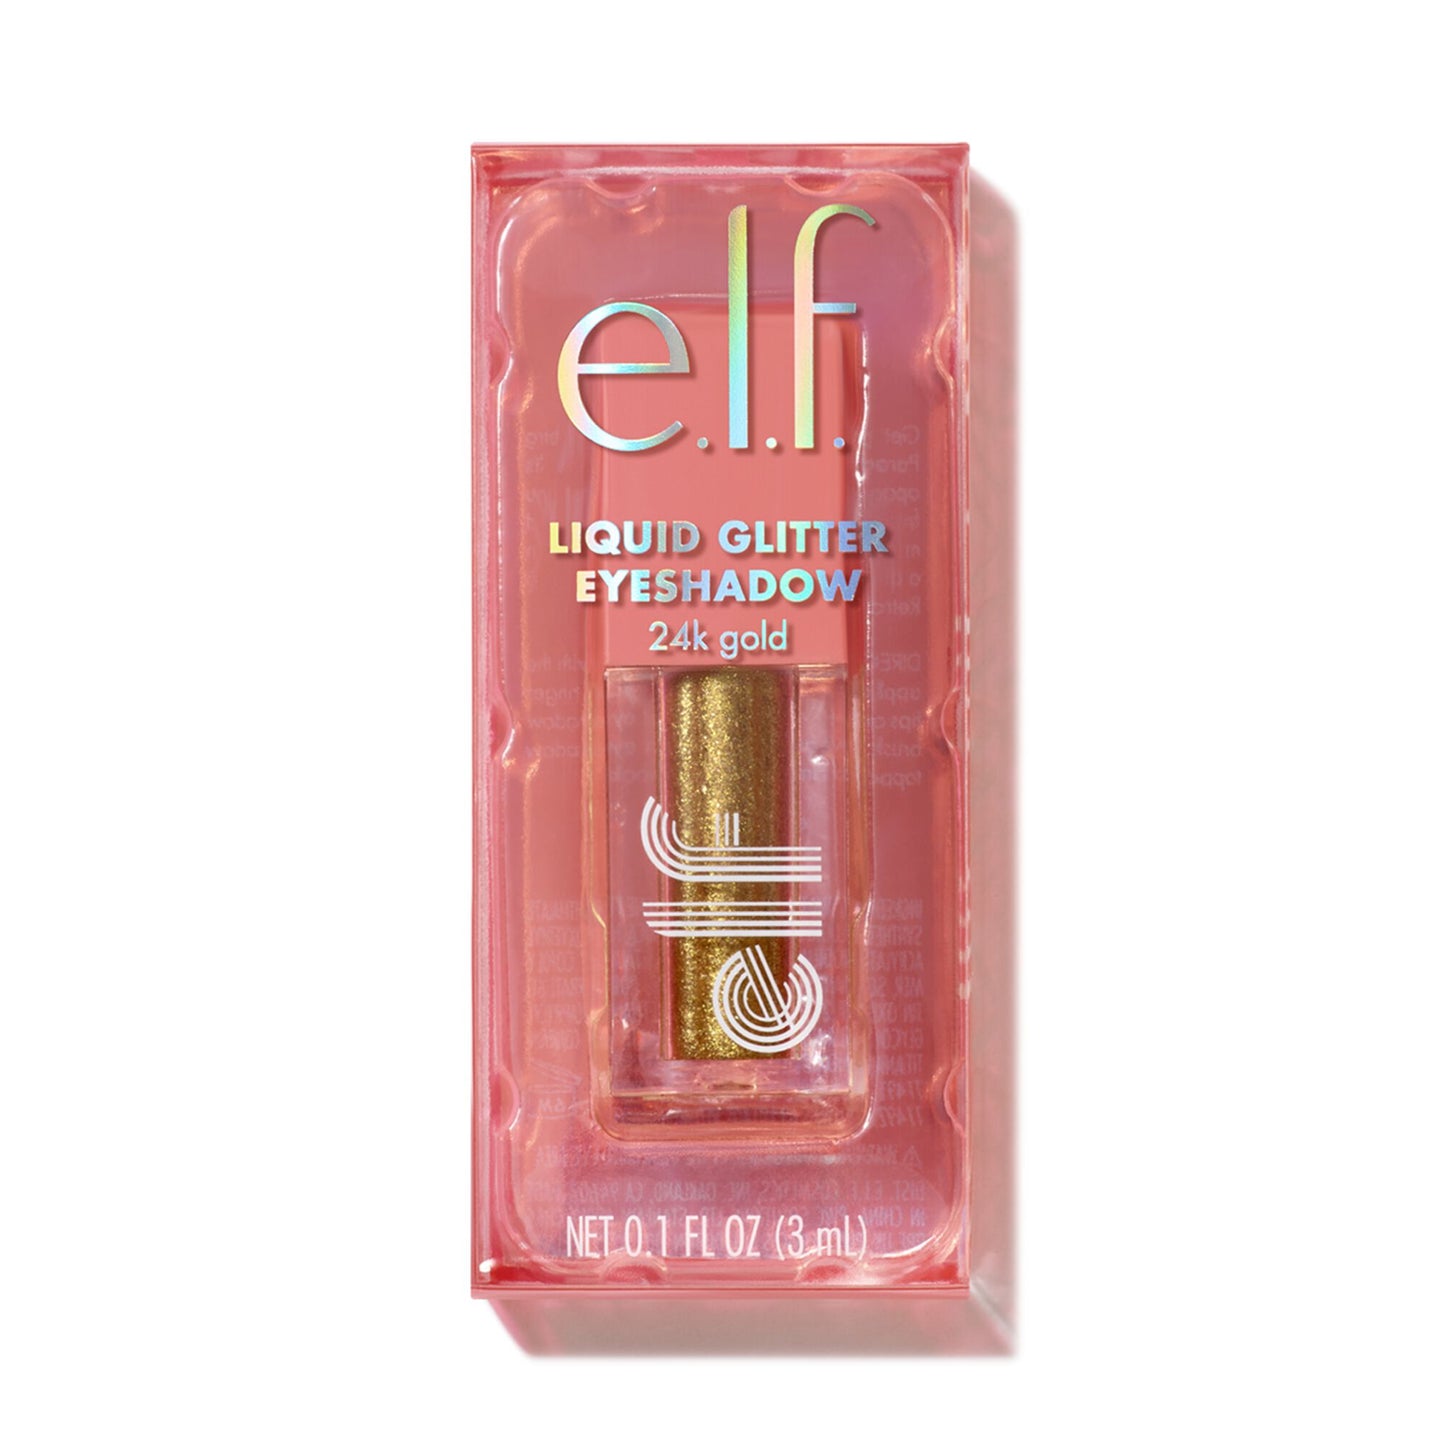 Elf Retro Paradise Liquid Glitter Eyeshadow 24k Gold